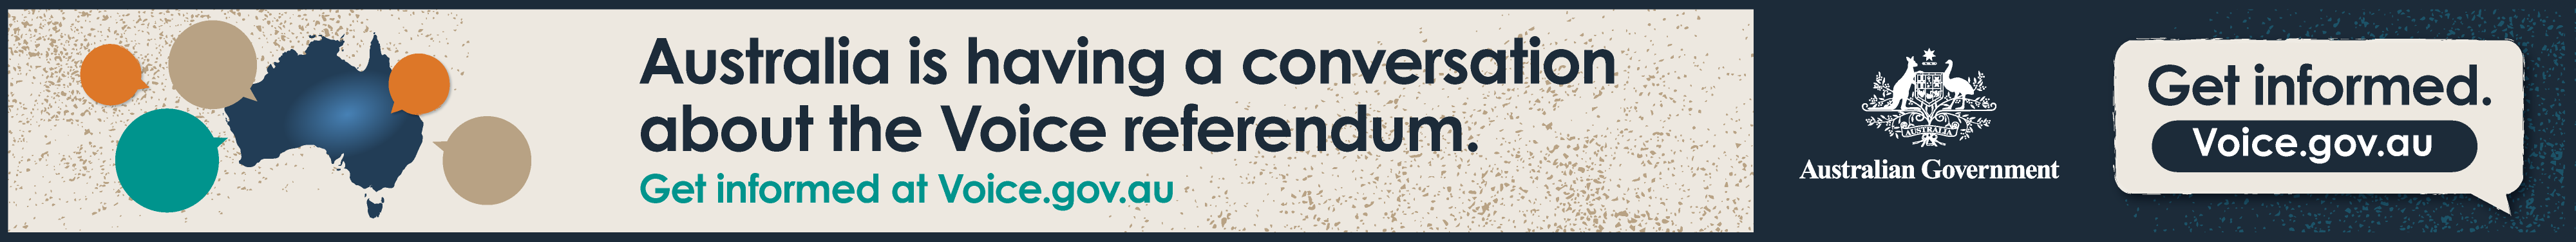 voice referendum community toolkit web banner english 02